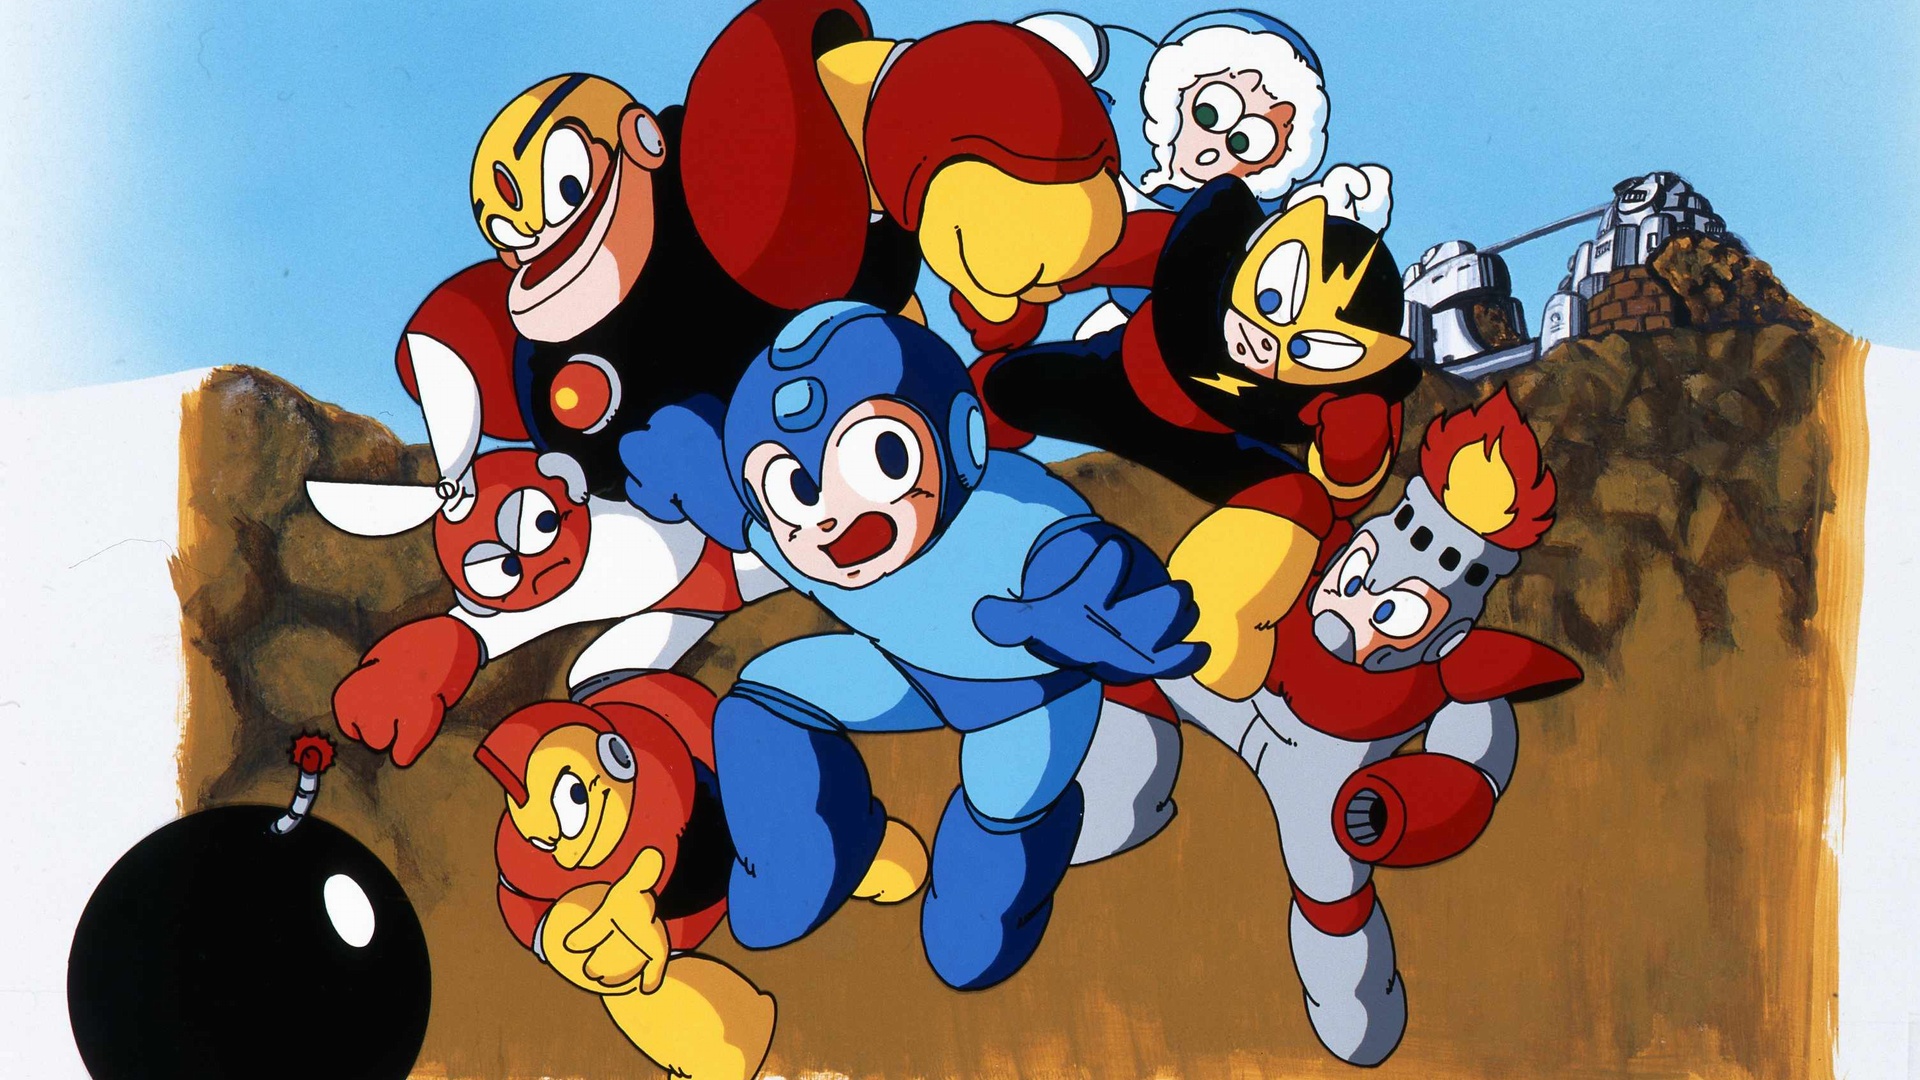 Guts Man Mega Man Ice Man Mega Man Elec Man Mega Man Fire Man Mega Man Bomb Man Mega Man Mega Man Cu 1920x1080